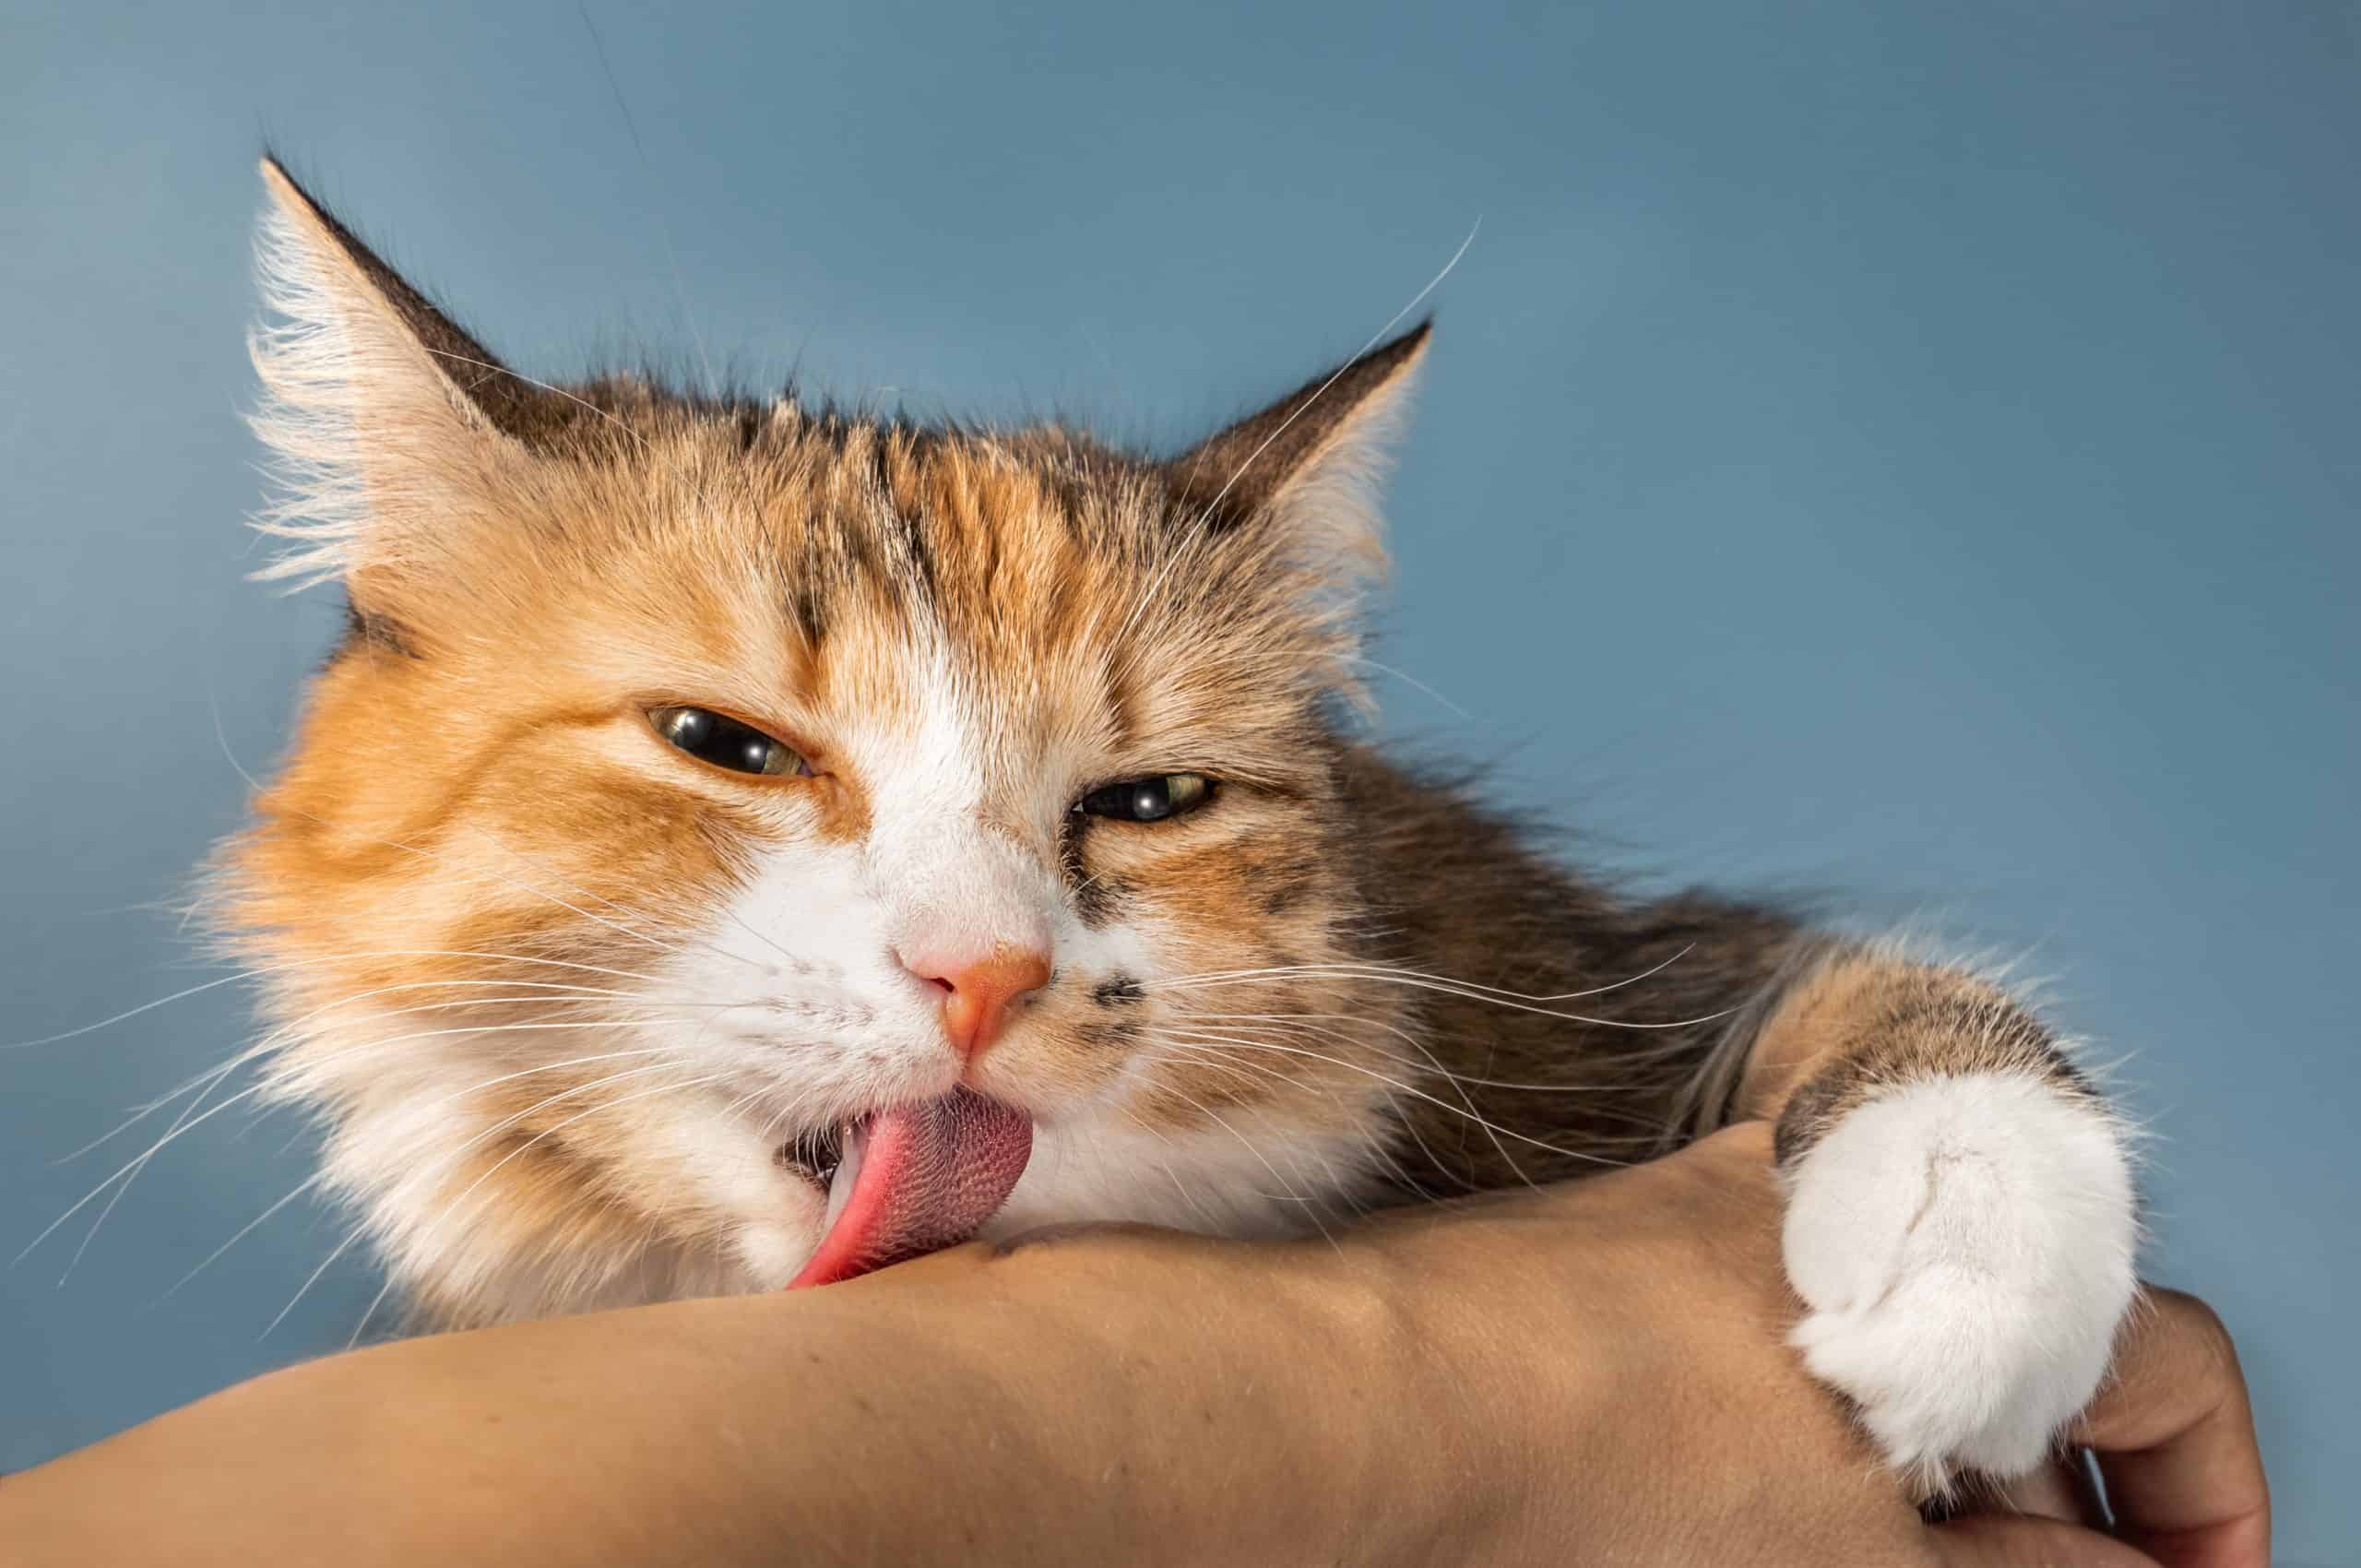 Cat licking arm